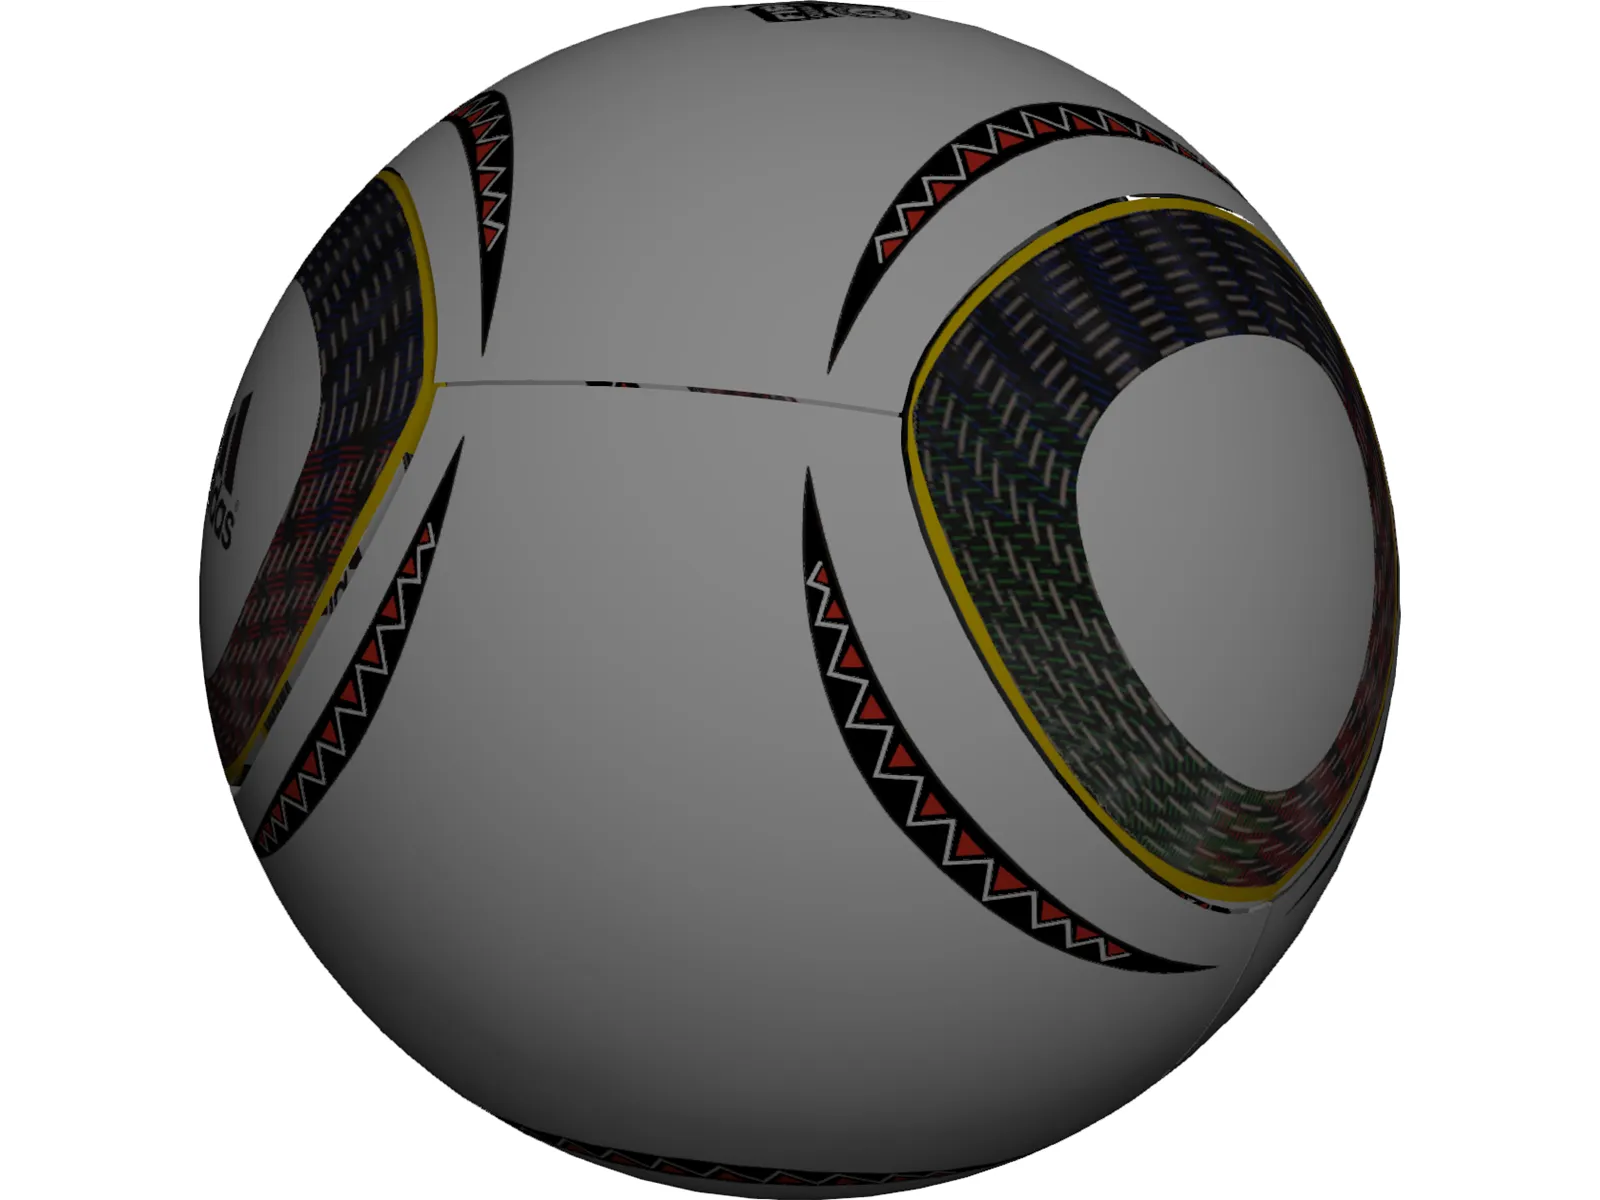 Soccer Ball Adidas Jabulani Official FIFA World Cup 2010 3D Model